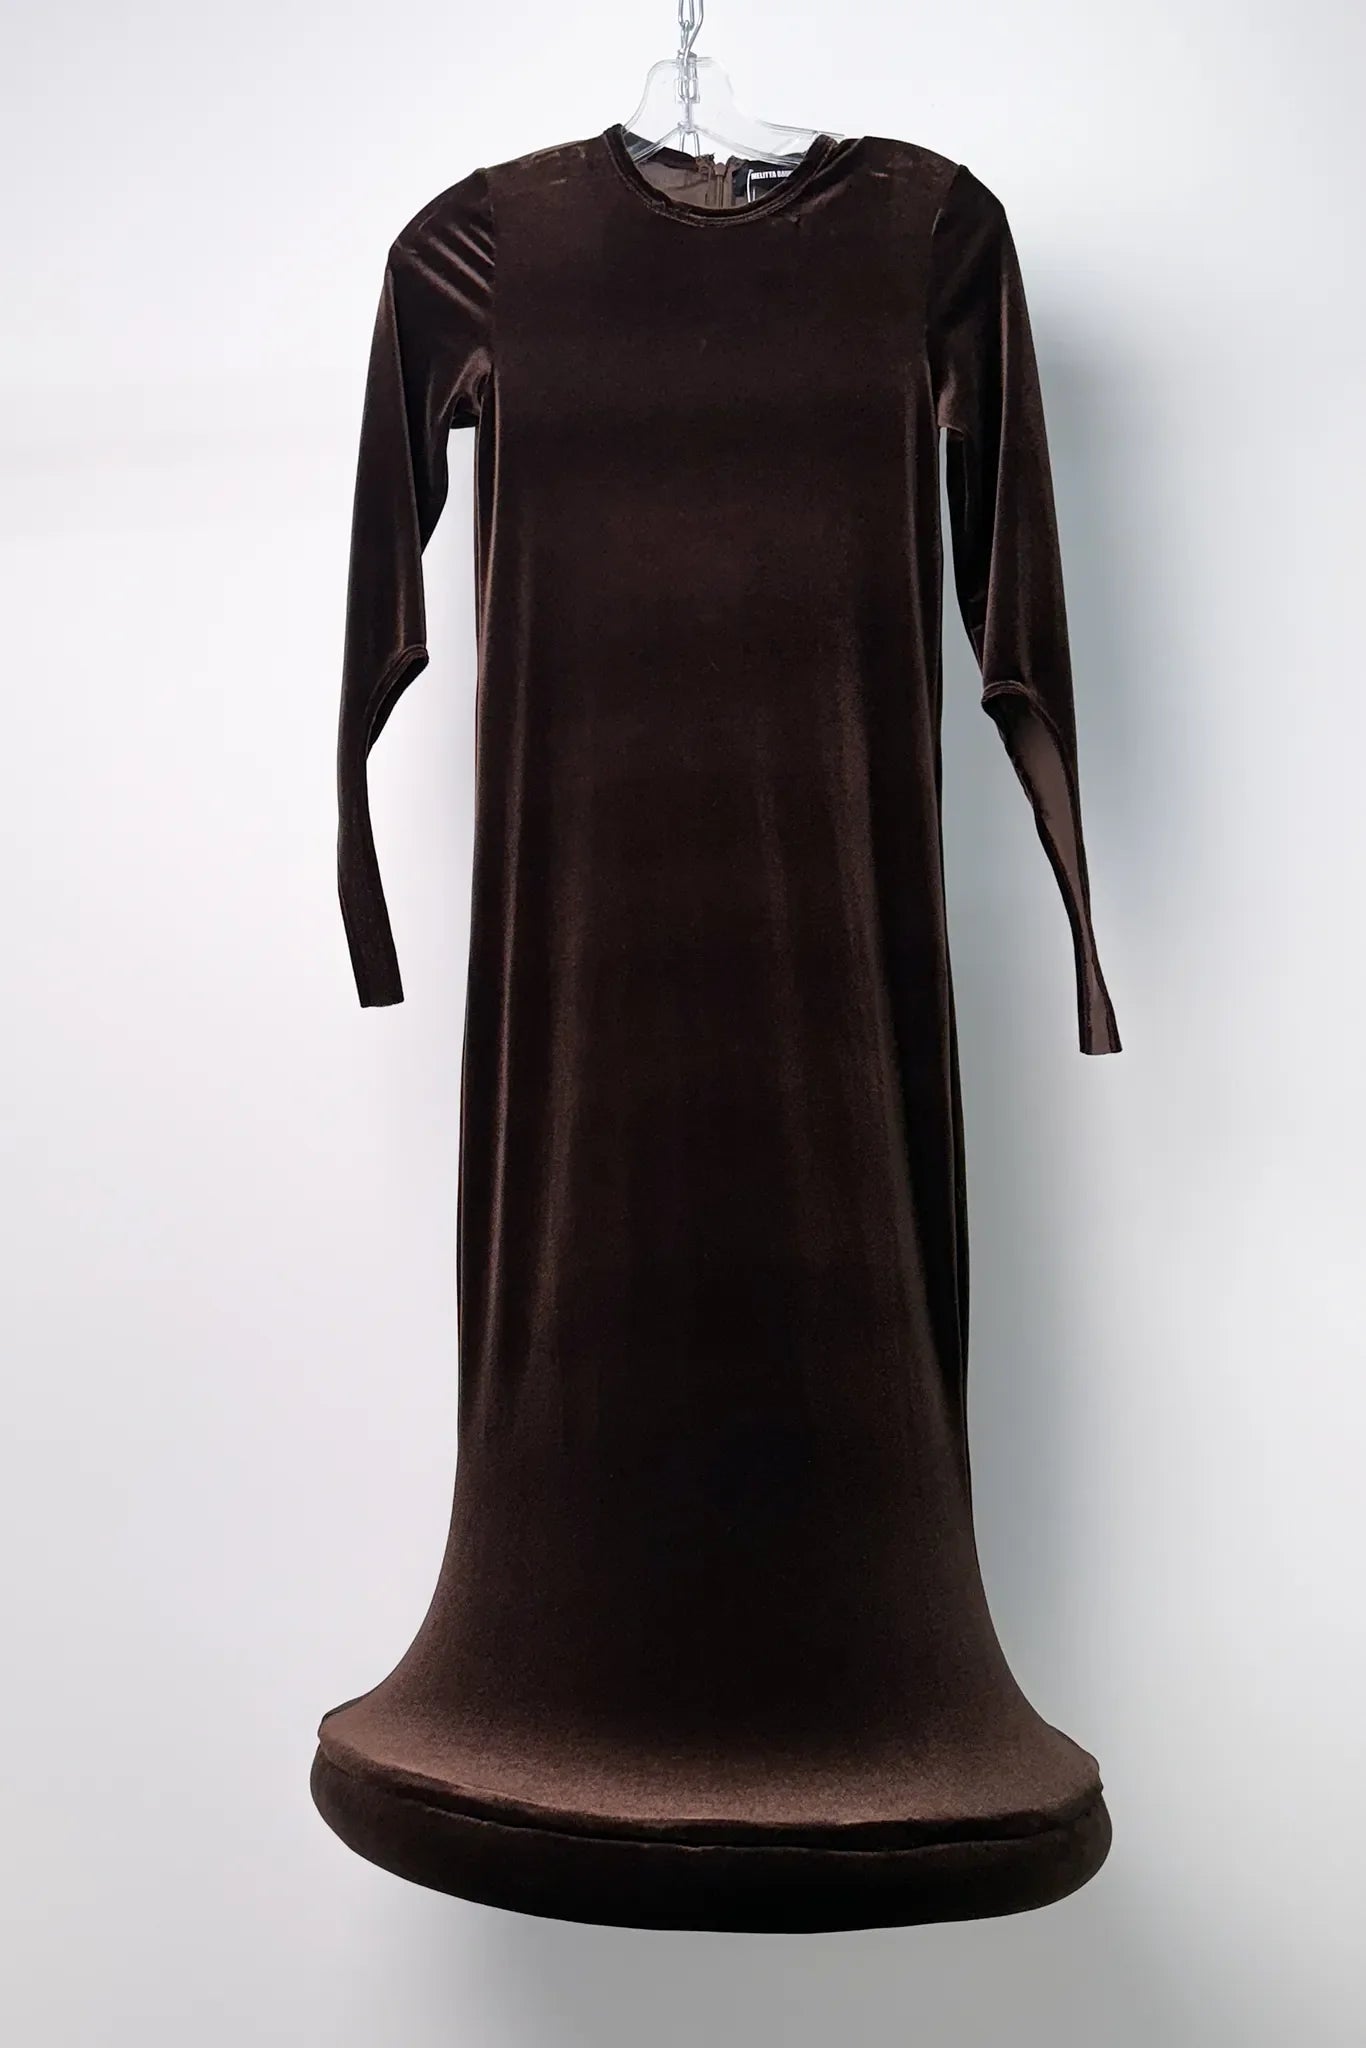 073 velvet long sleeves circle dress with RING DETAIL